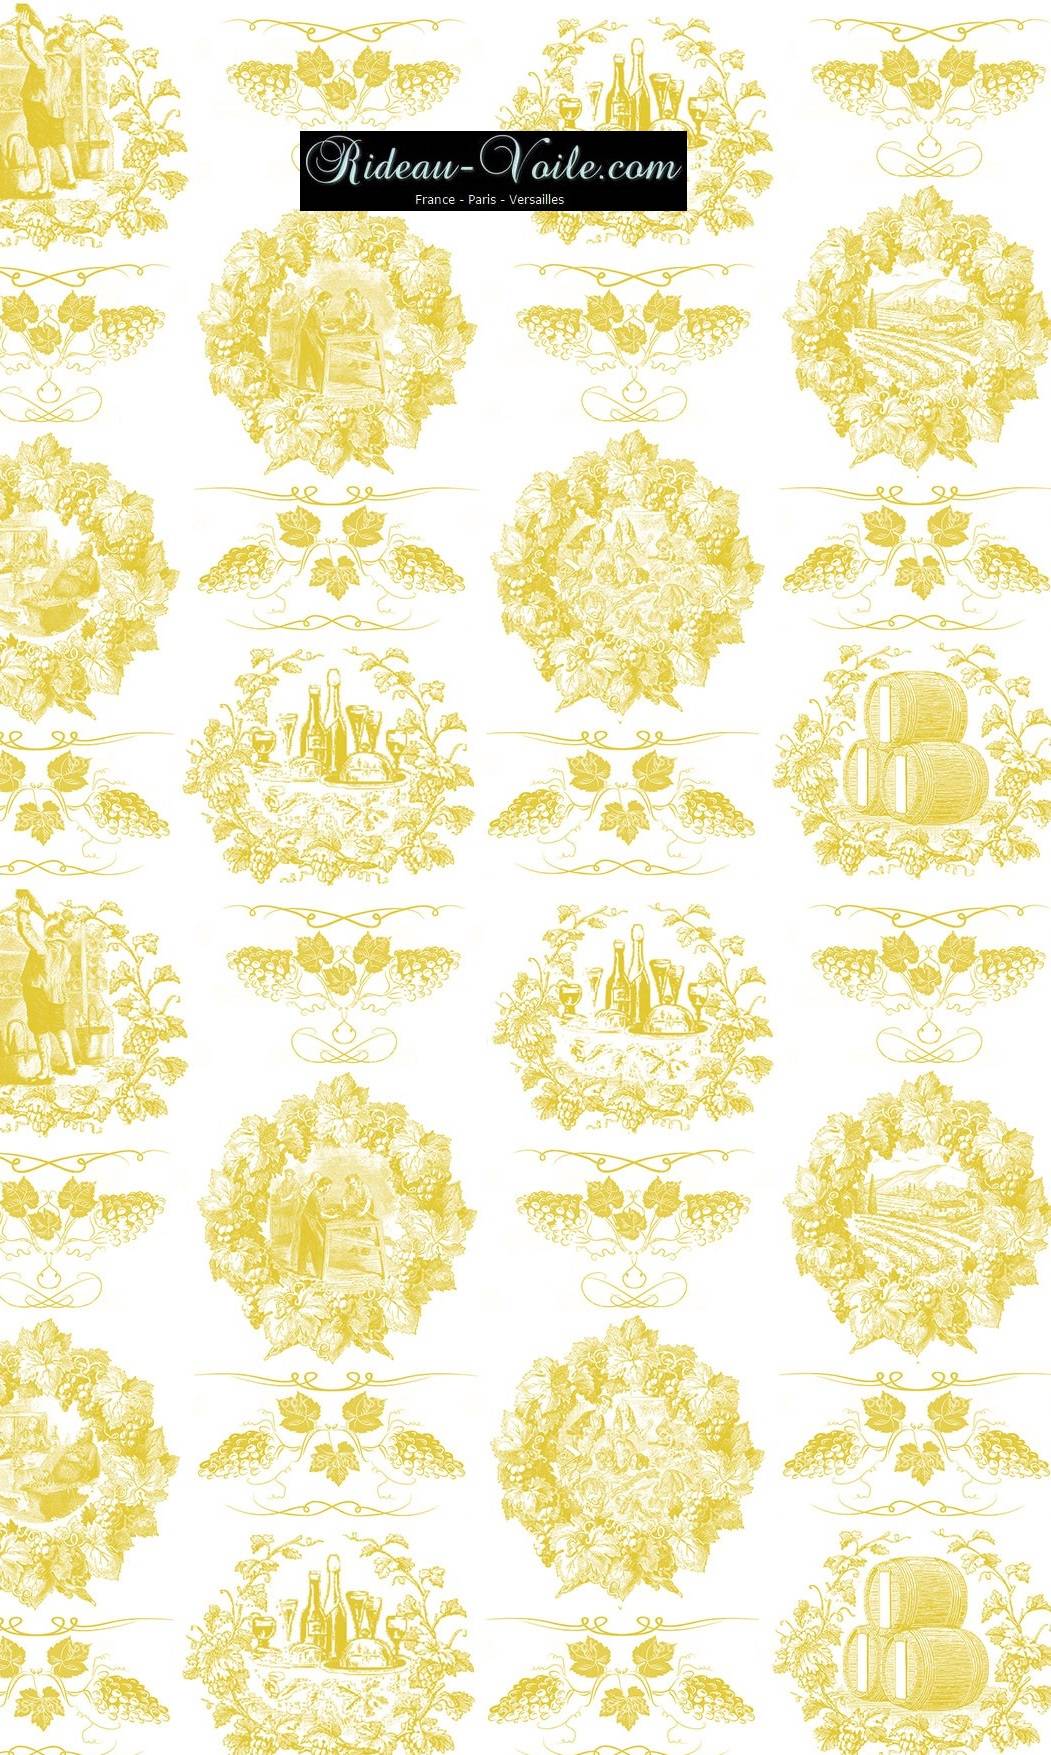 Toile de jouy tissu motif imprimé ameublement décoration tapisserie linge de maison housse coussin couette luxe lit fabric pattern printed home furnishing decoration tapestry linens cover cushion quilt luxury upholstery jaune yellow